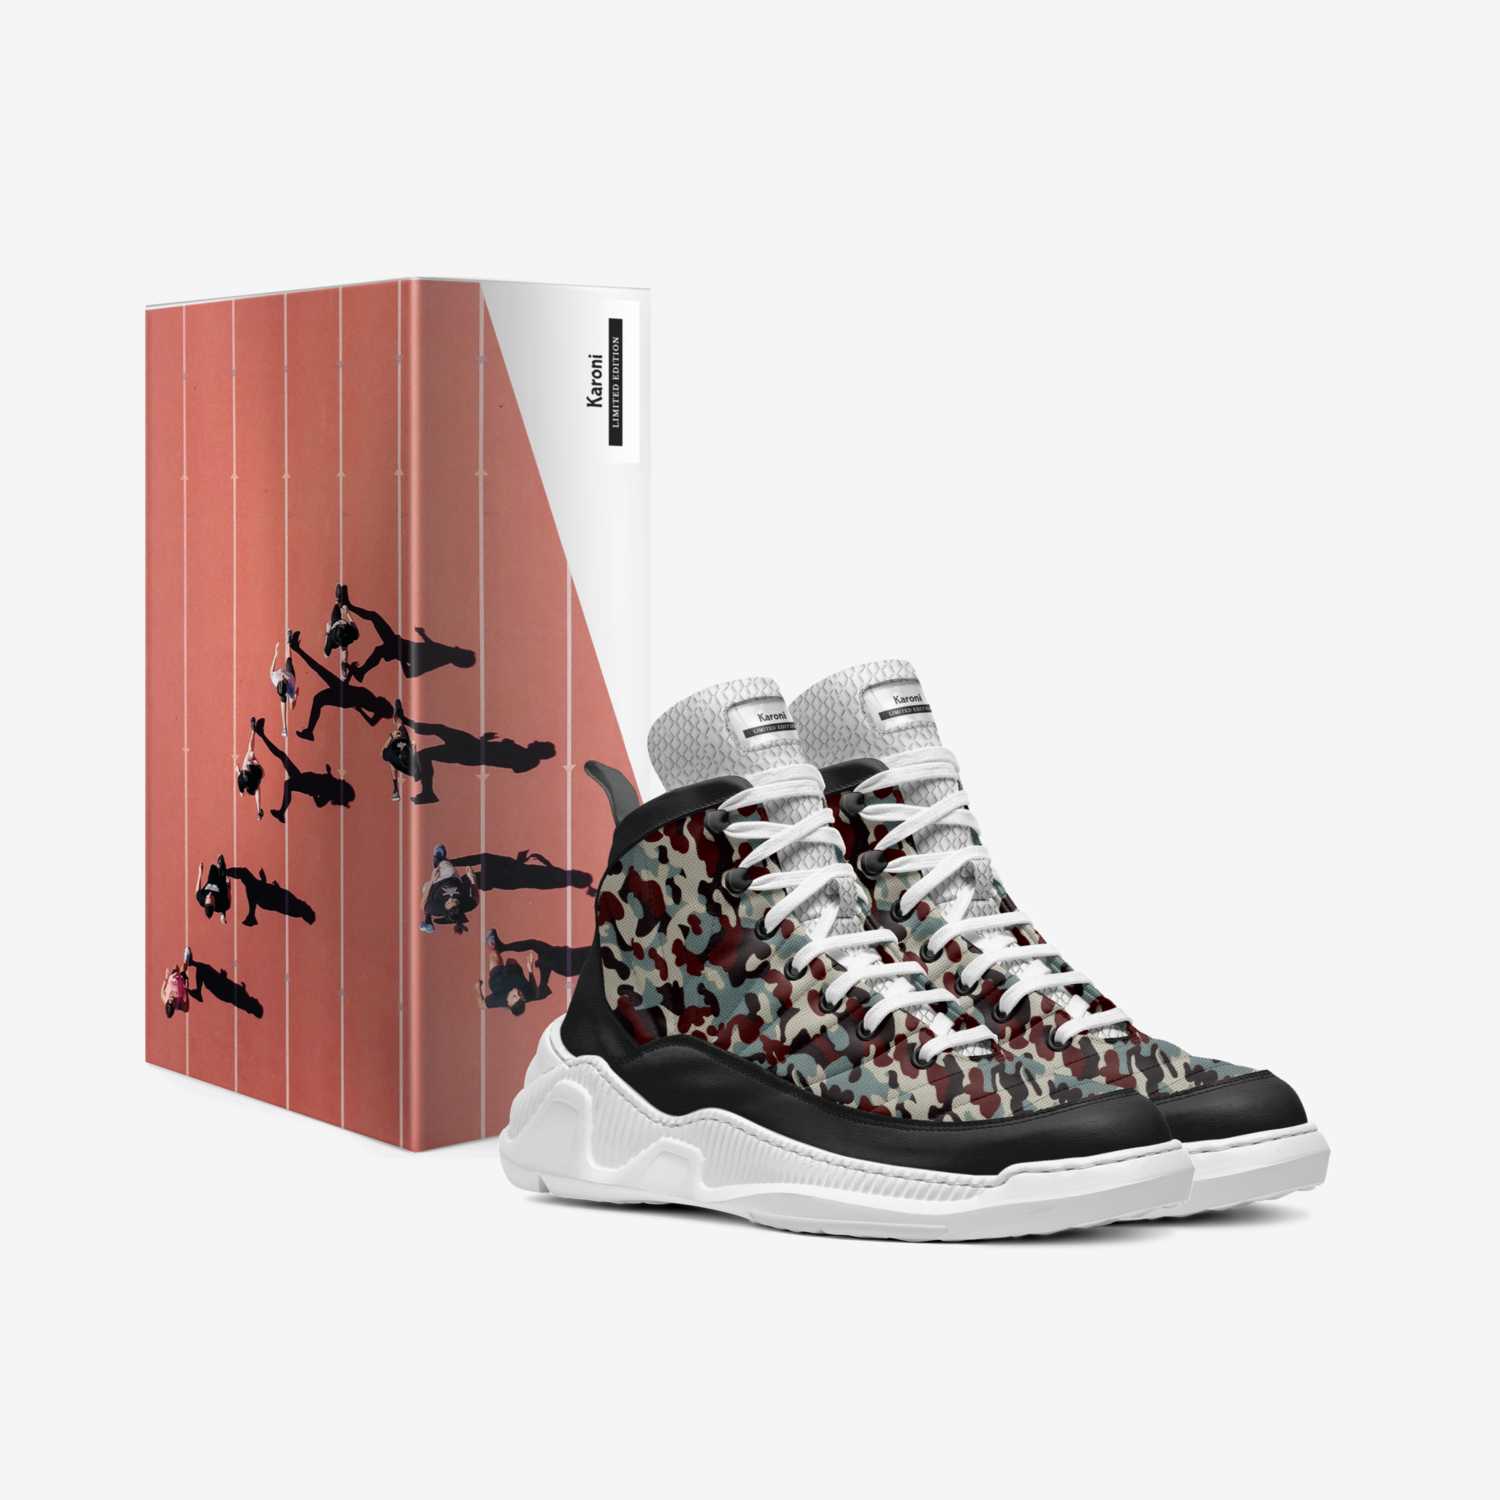 Karoni custom made in Italy shoes by Ighofimoni Joshua | Box view